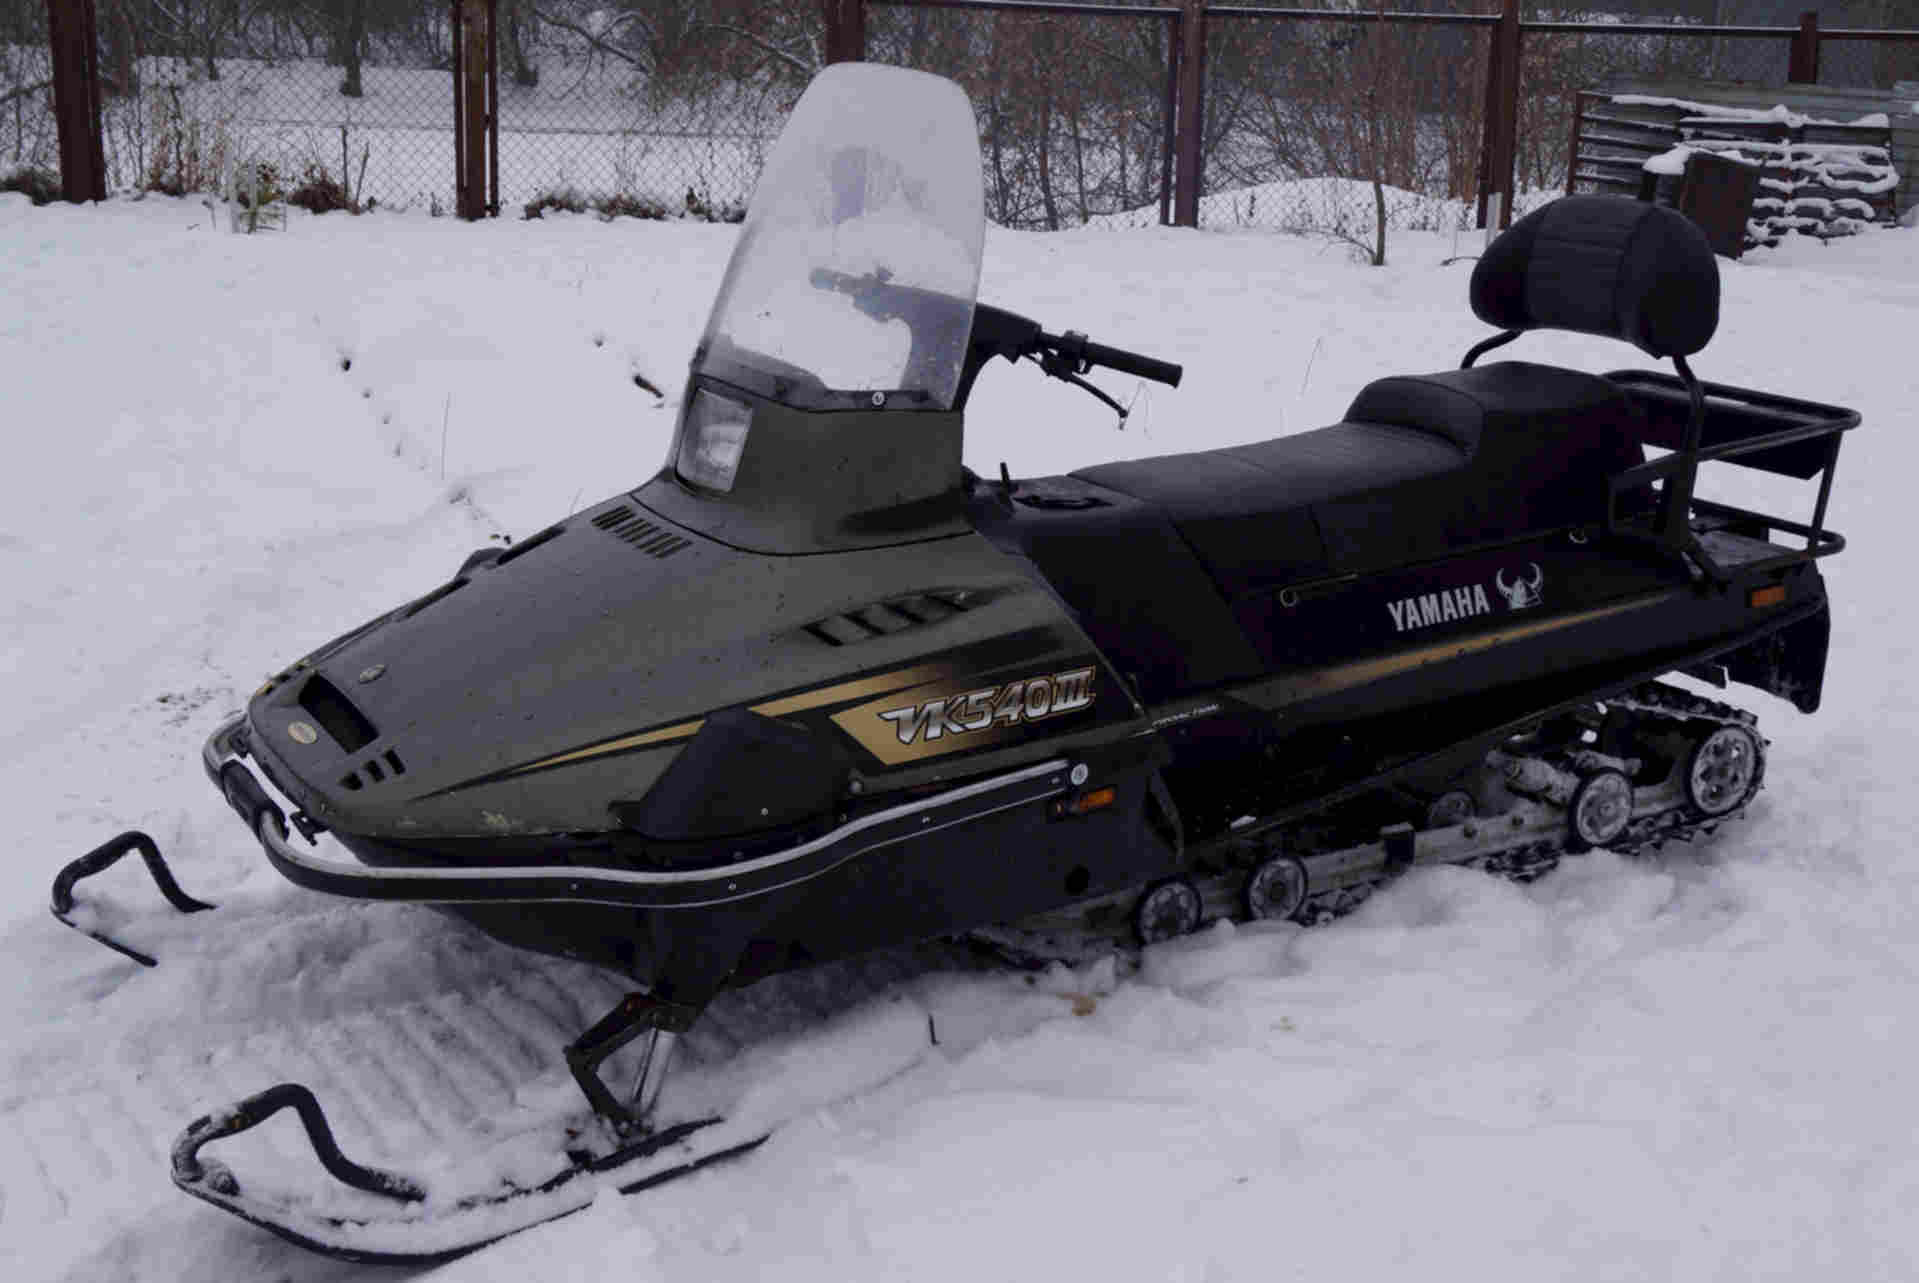 Купить снегоход б у в россии. Снегоход Yamaha Viking 540. Снегоход Ямаха vk540. Снегоход Ямаха ВК 540. Ямаха Викинг vk540e.